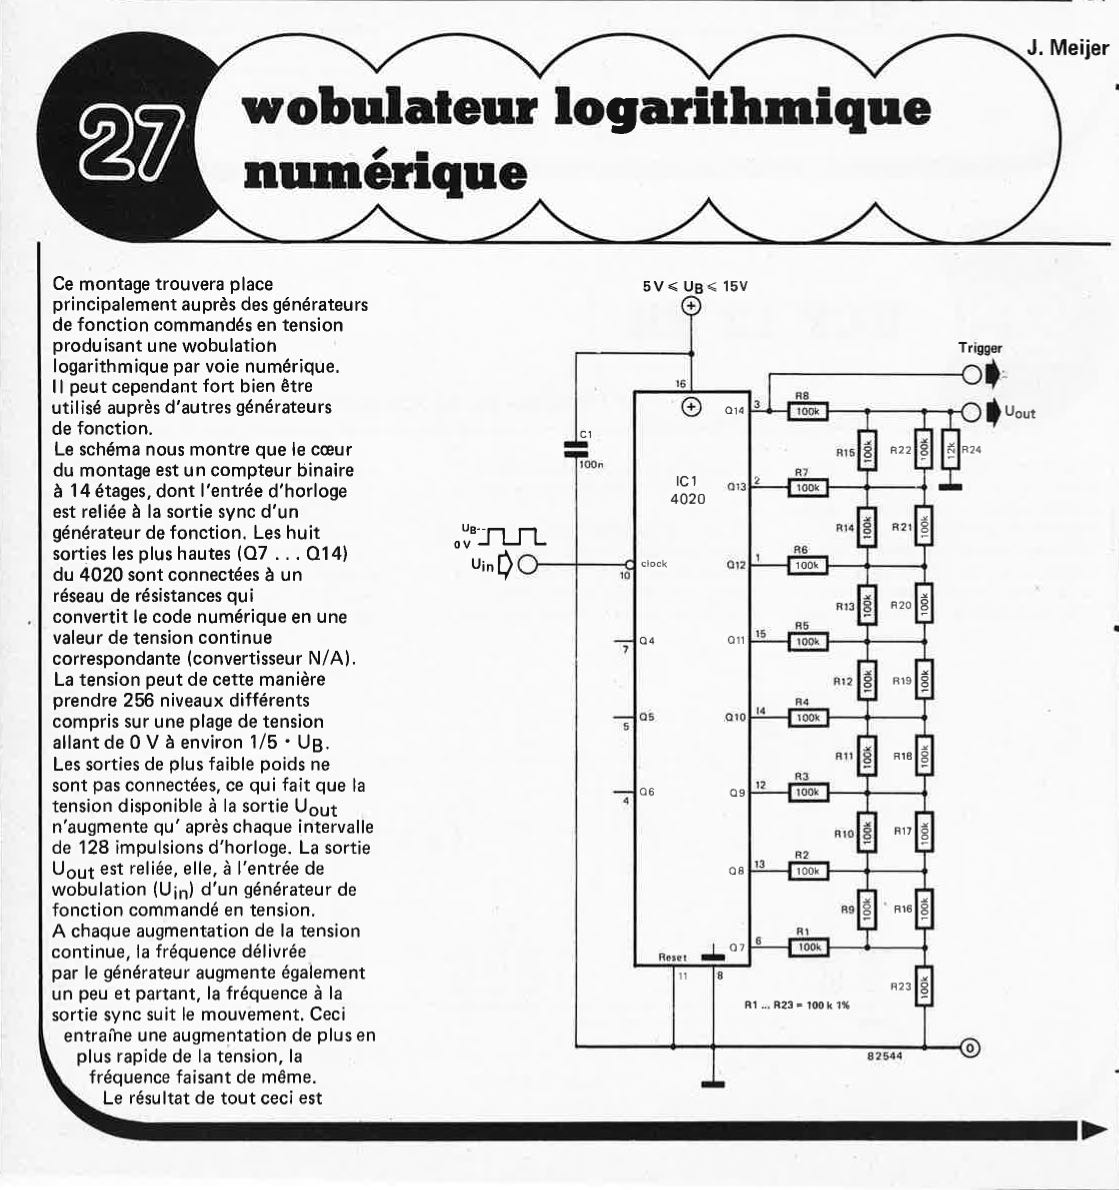 wobulateur logarith1niqae 11ua1enque